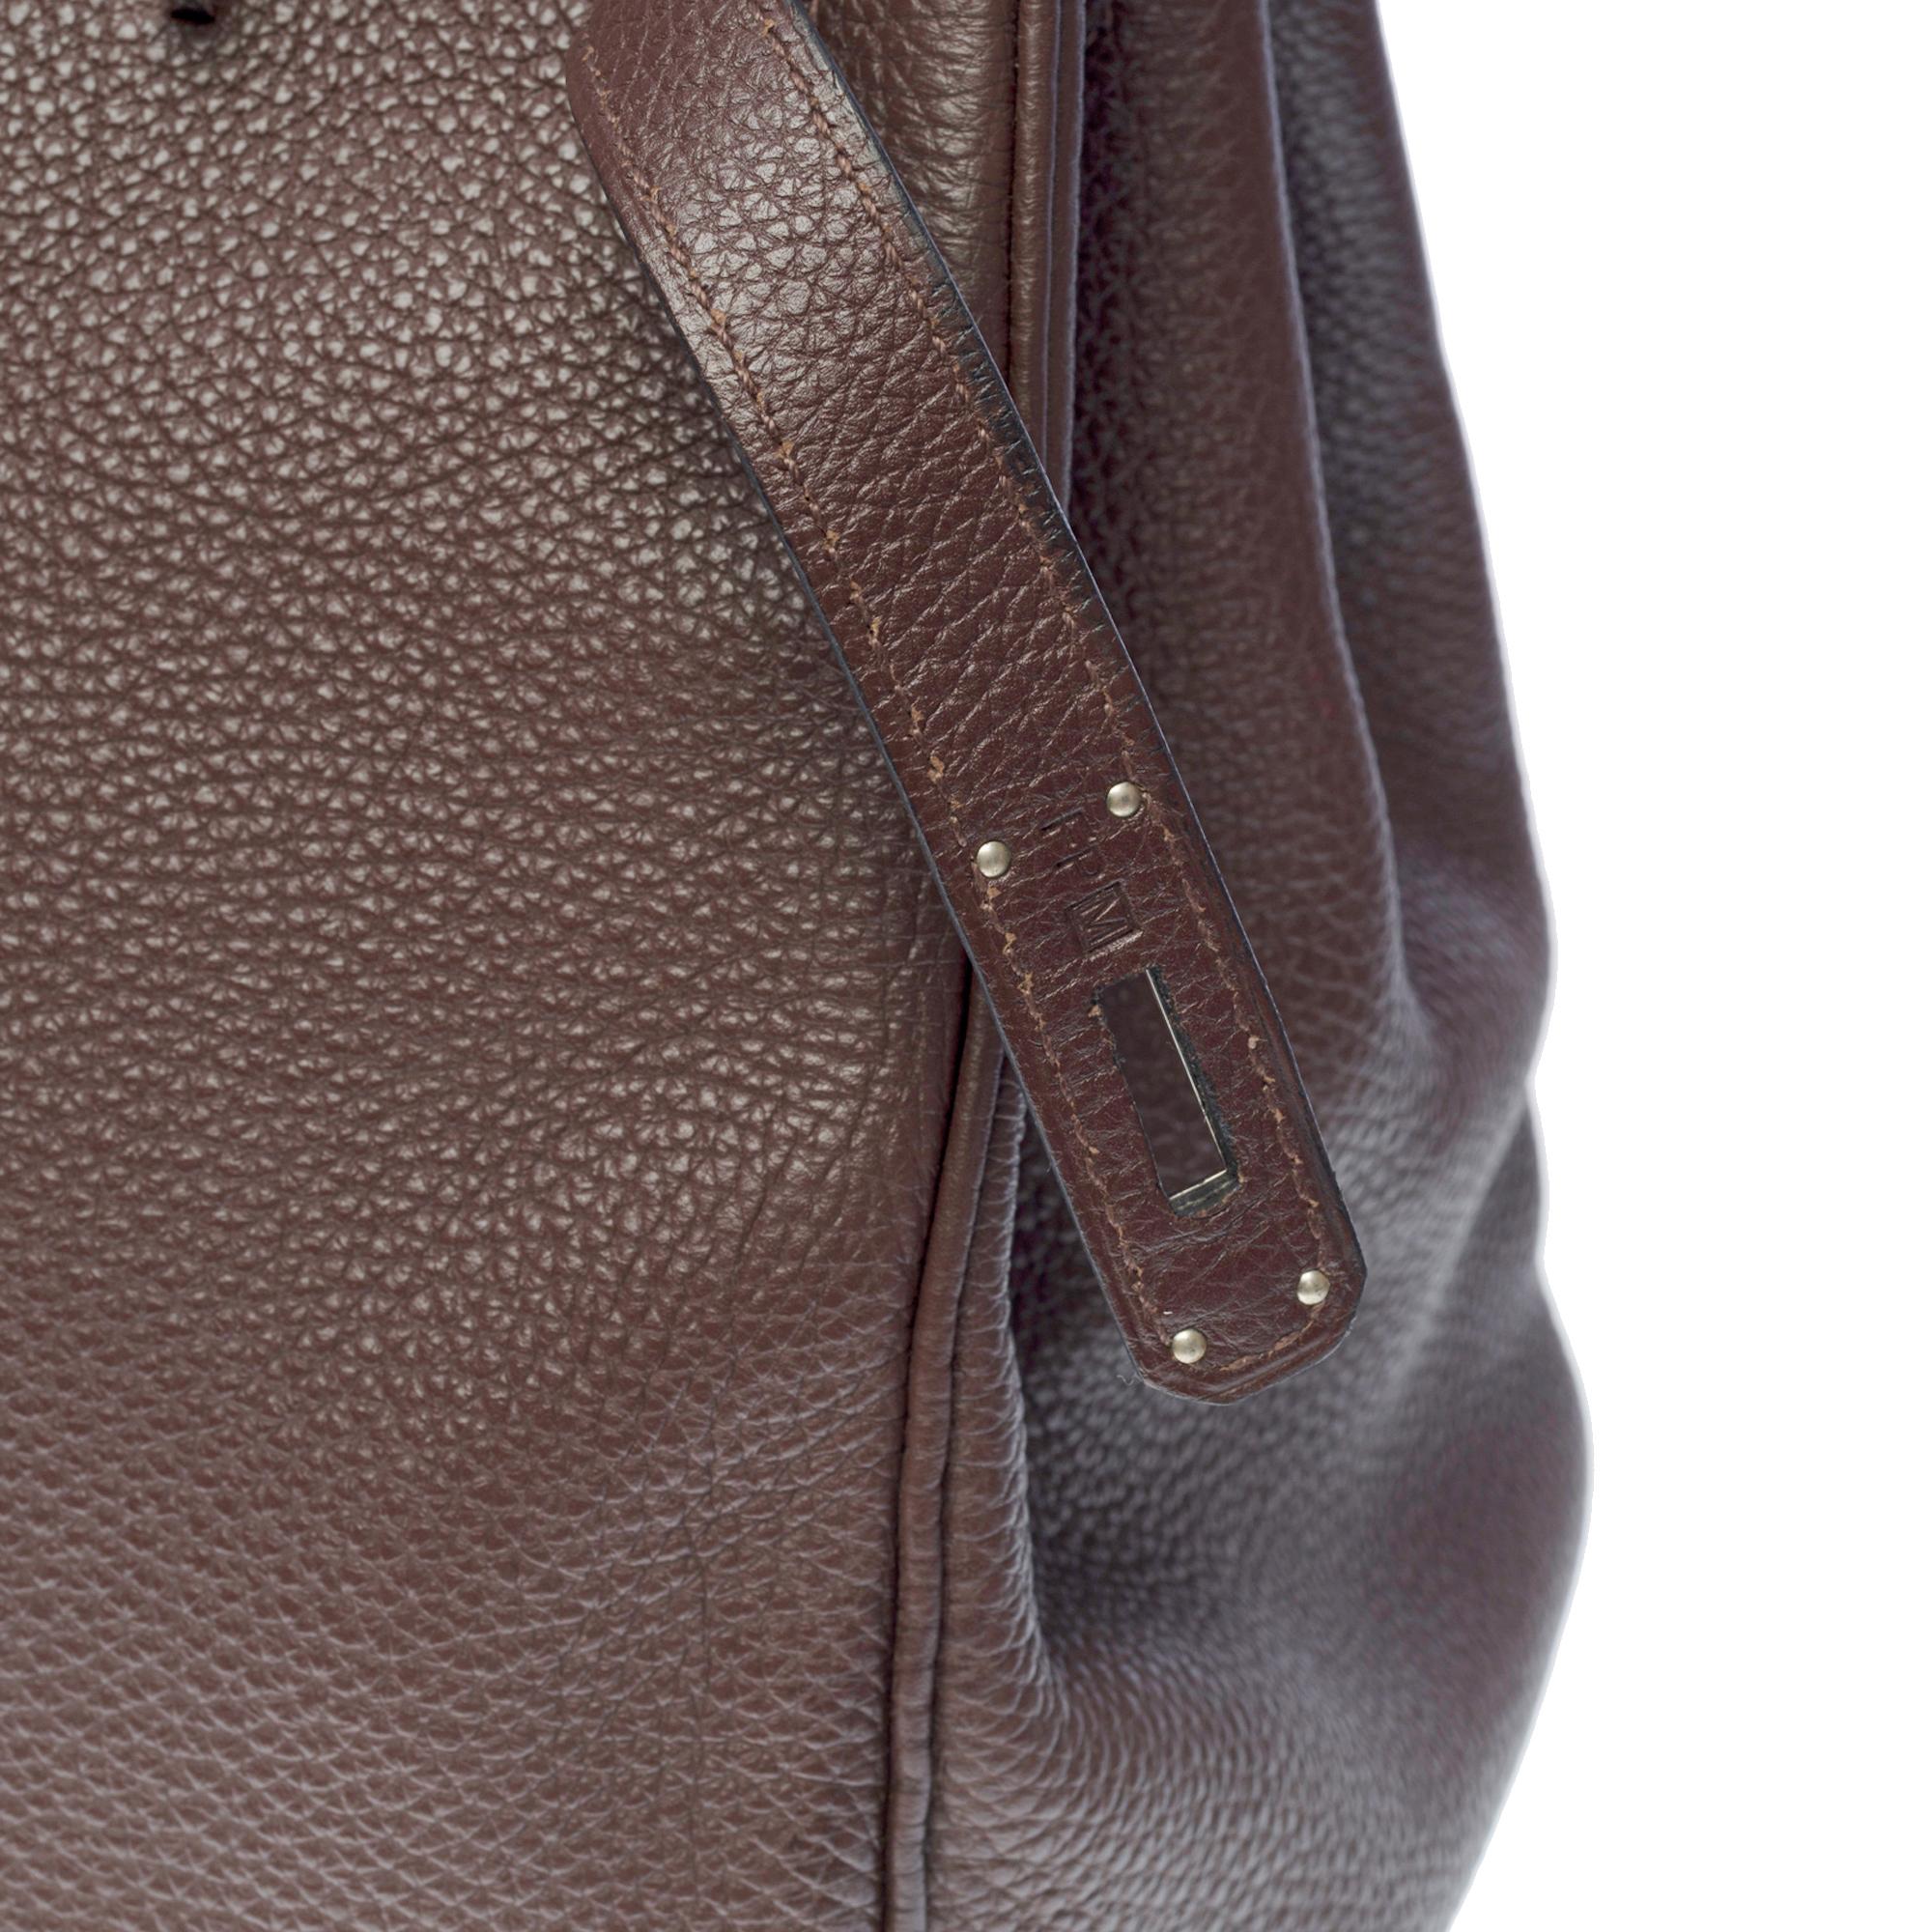 Splendid Hermès Birkin 35 handbag in brown Taurillon Clémence leather, SHW 1